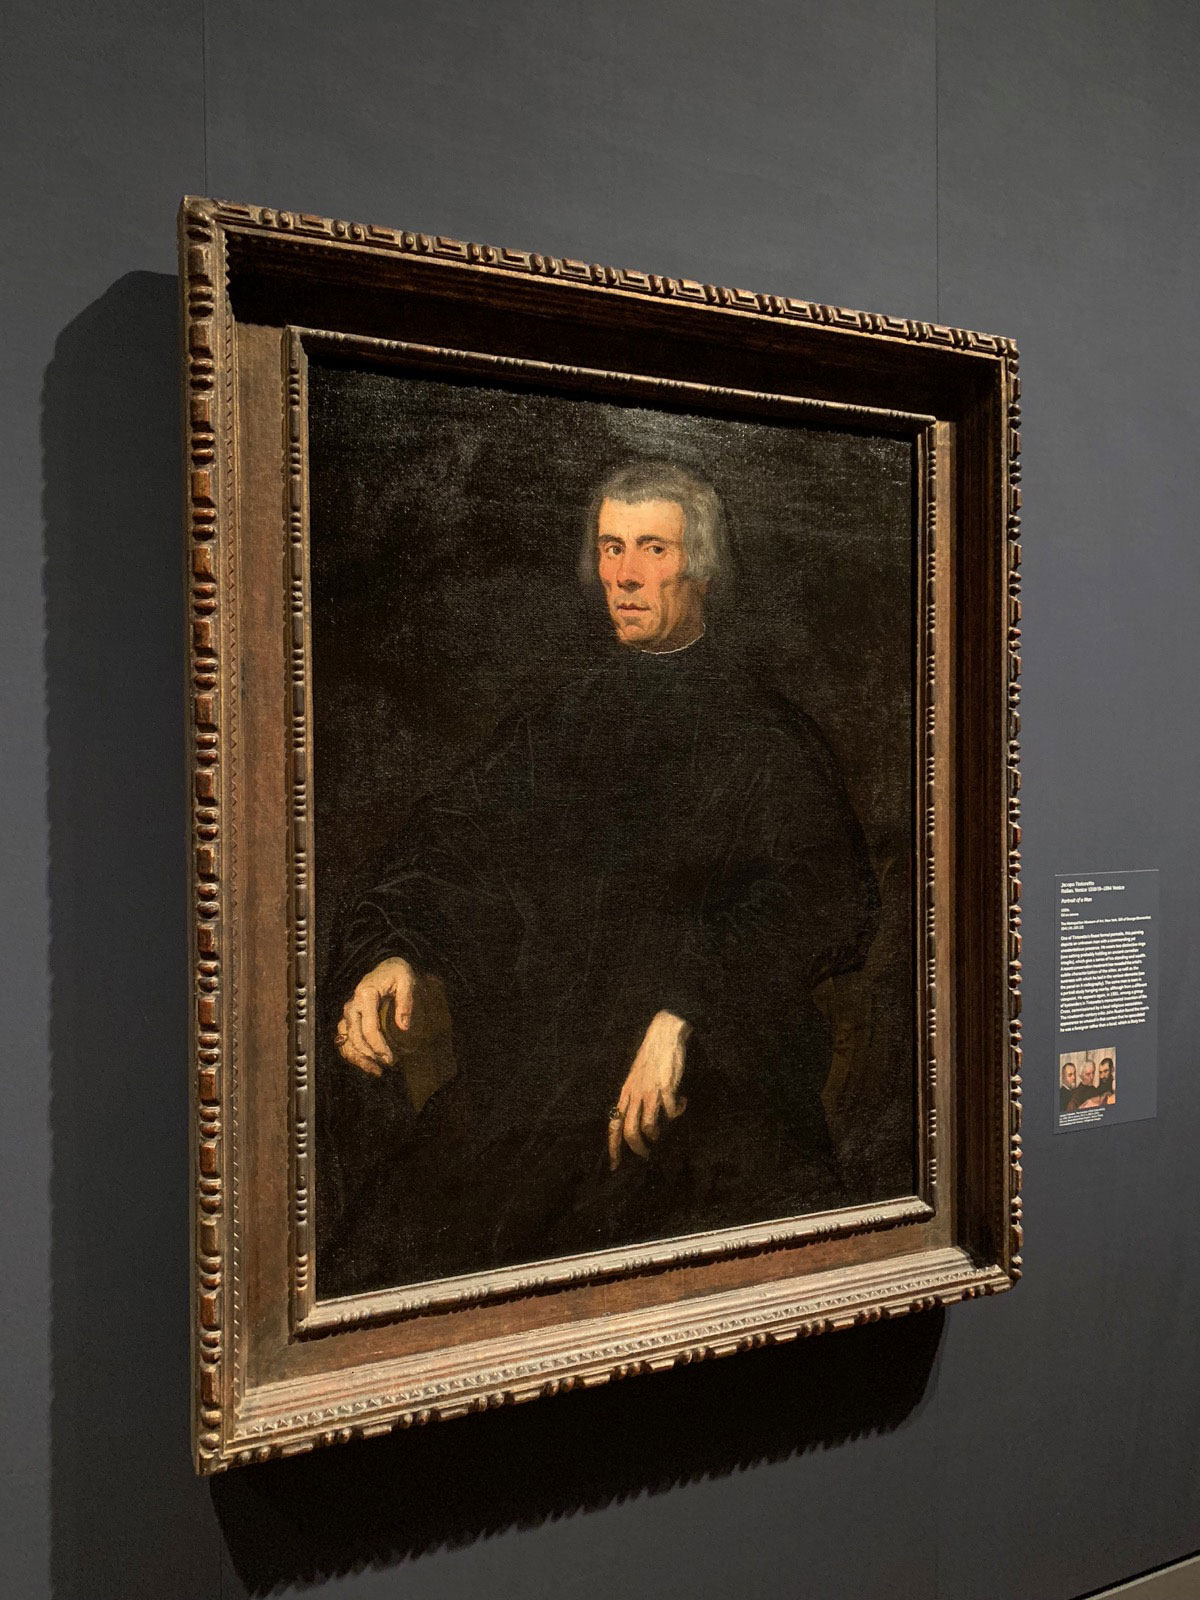 Jacobo Tintoretto "Portrait of a Man" 1550s